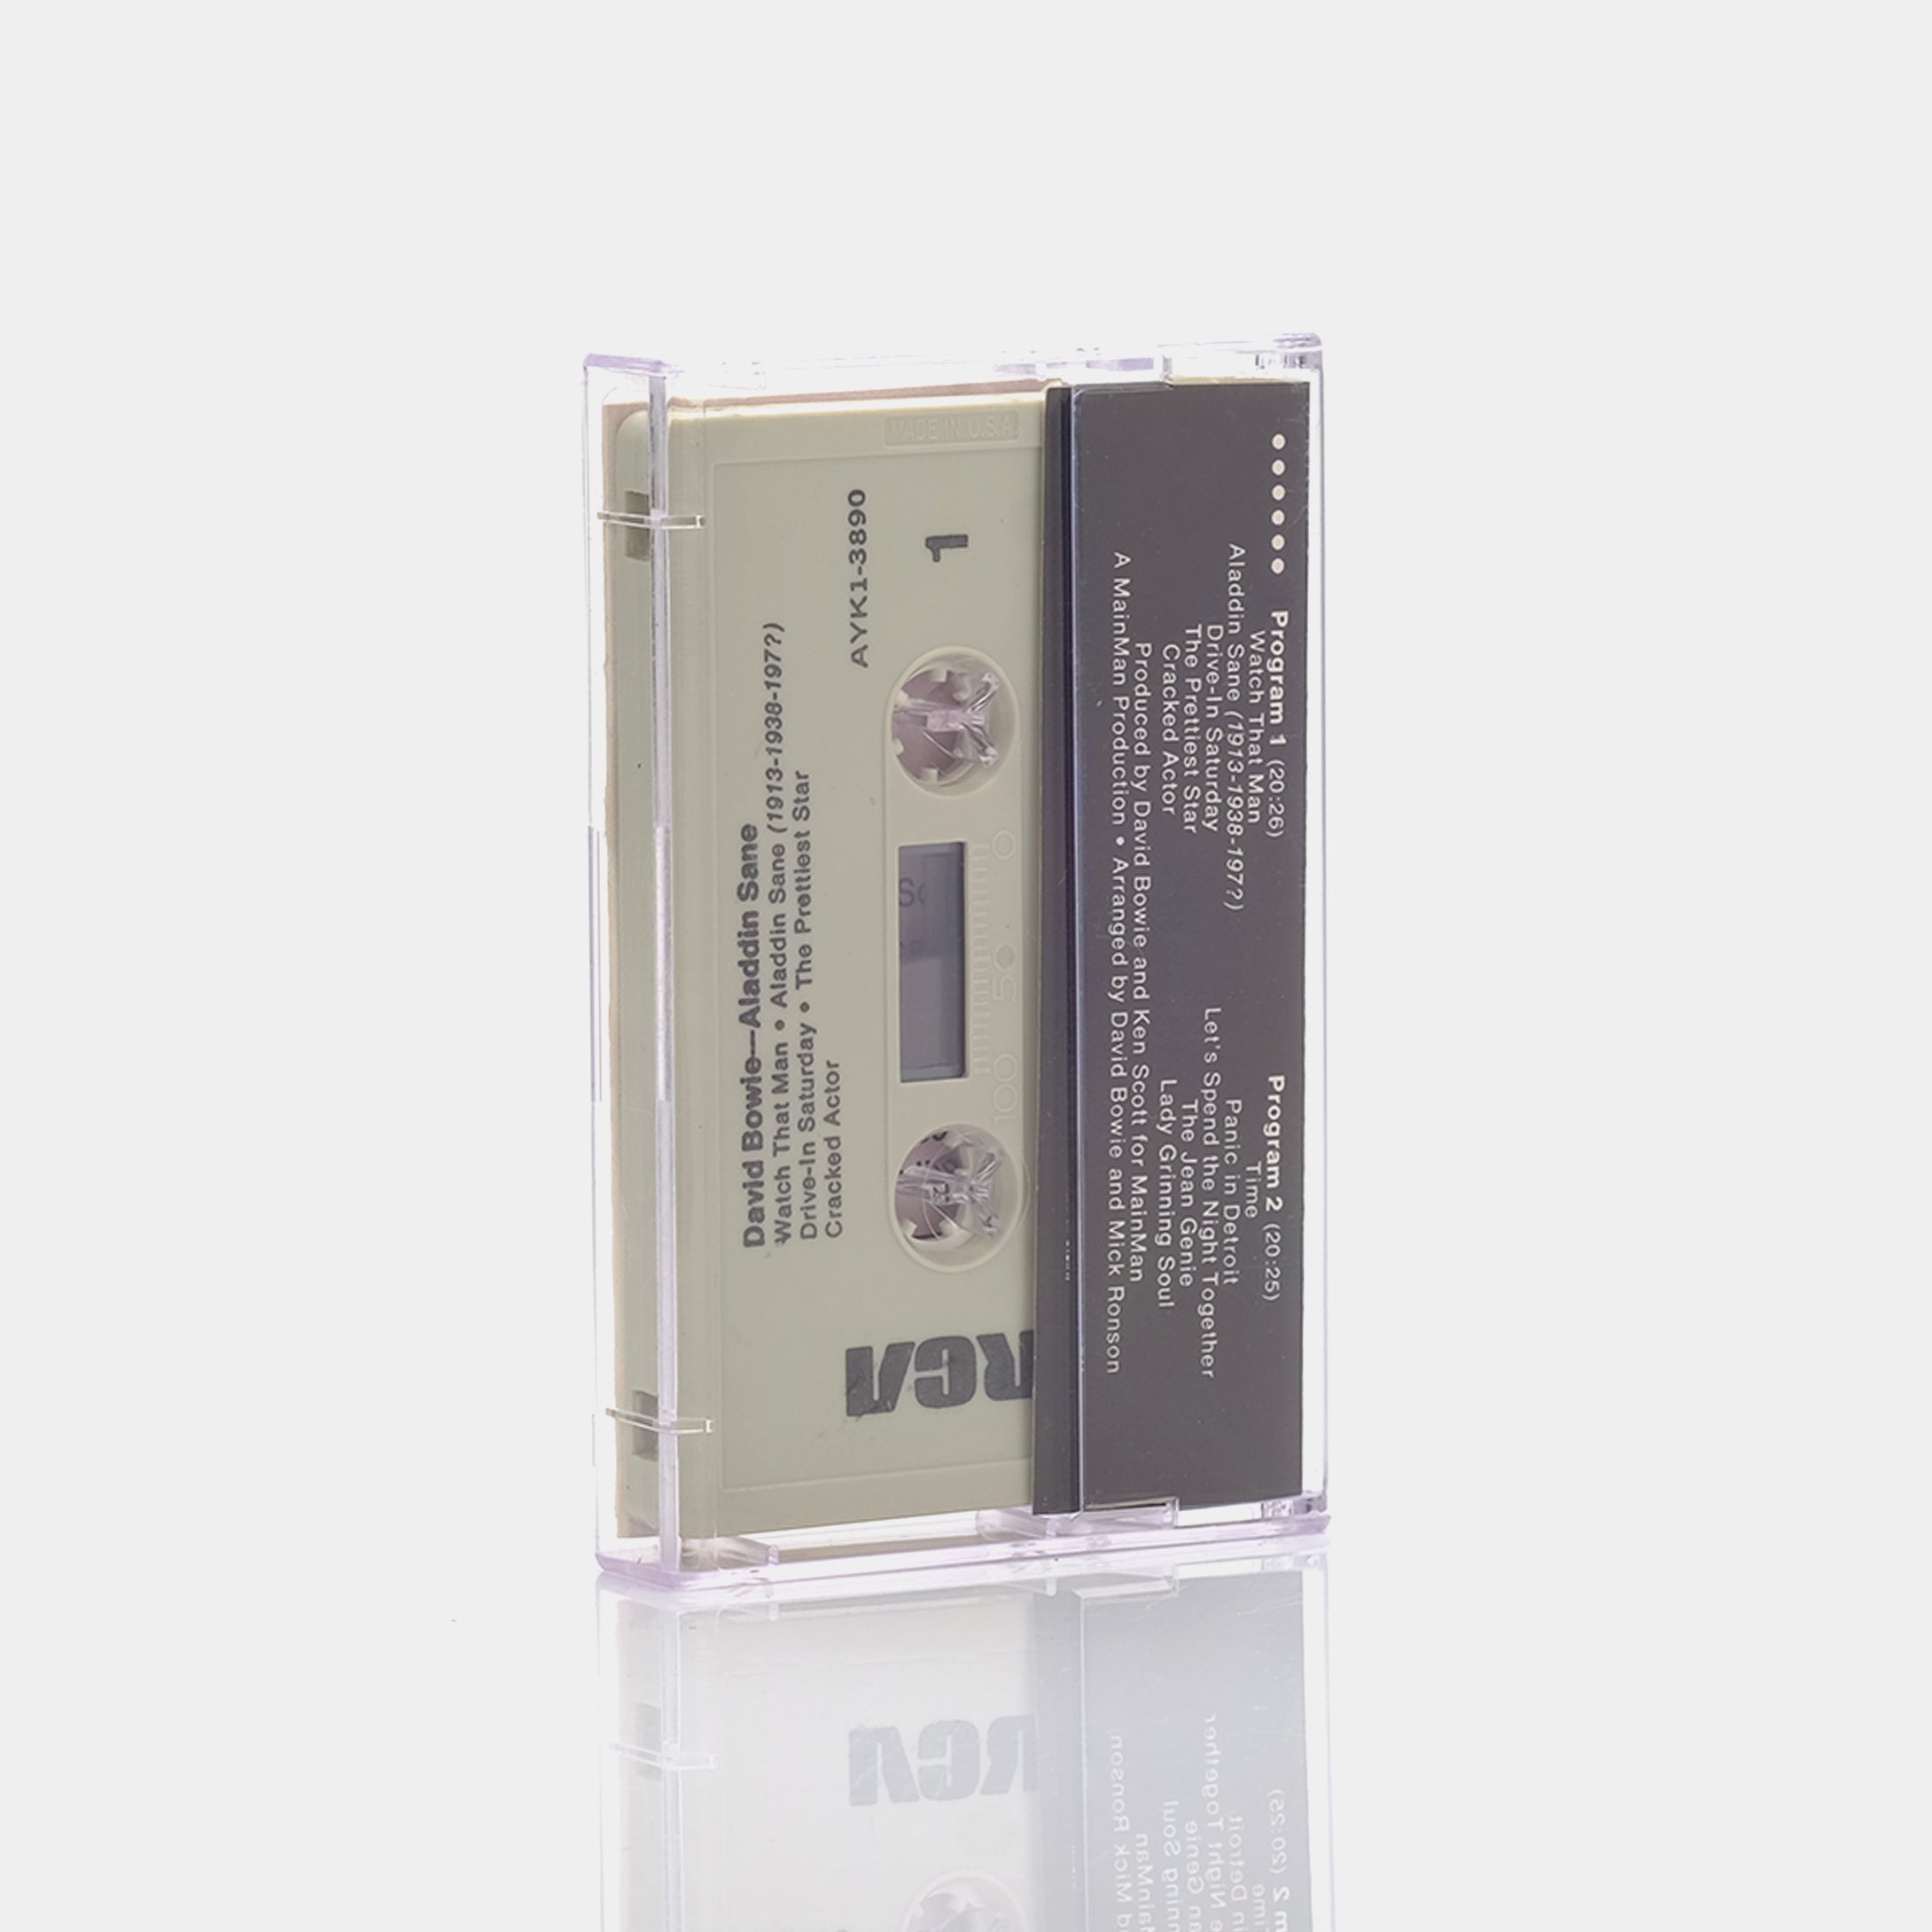 David Bowie - Aladdin Sane Cassette Tape